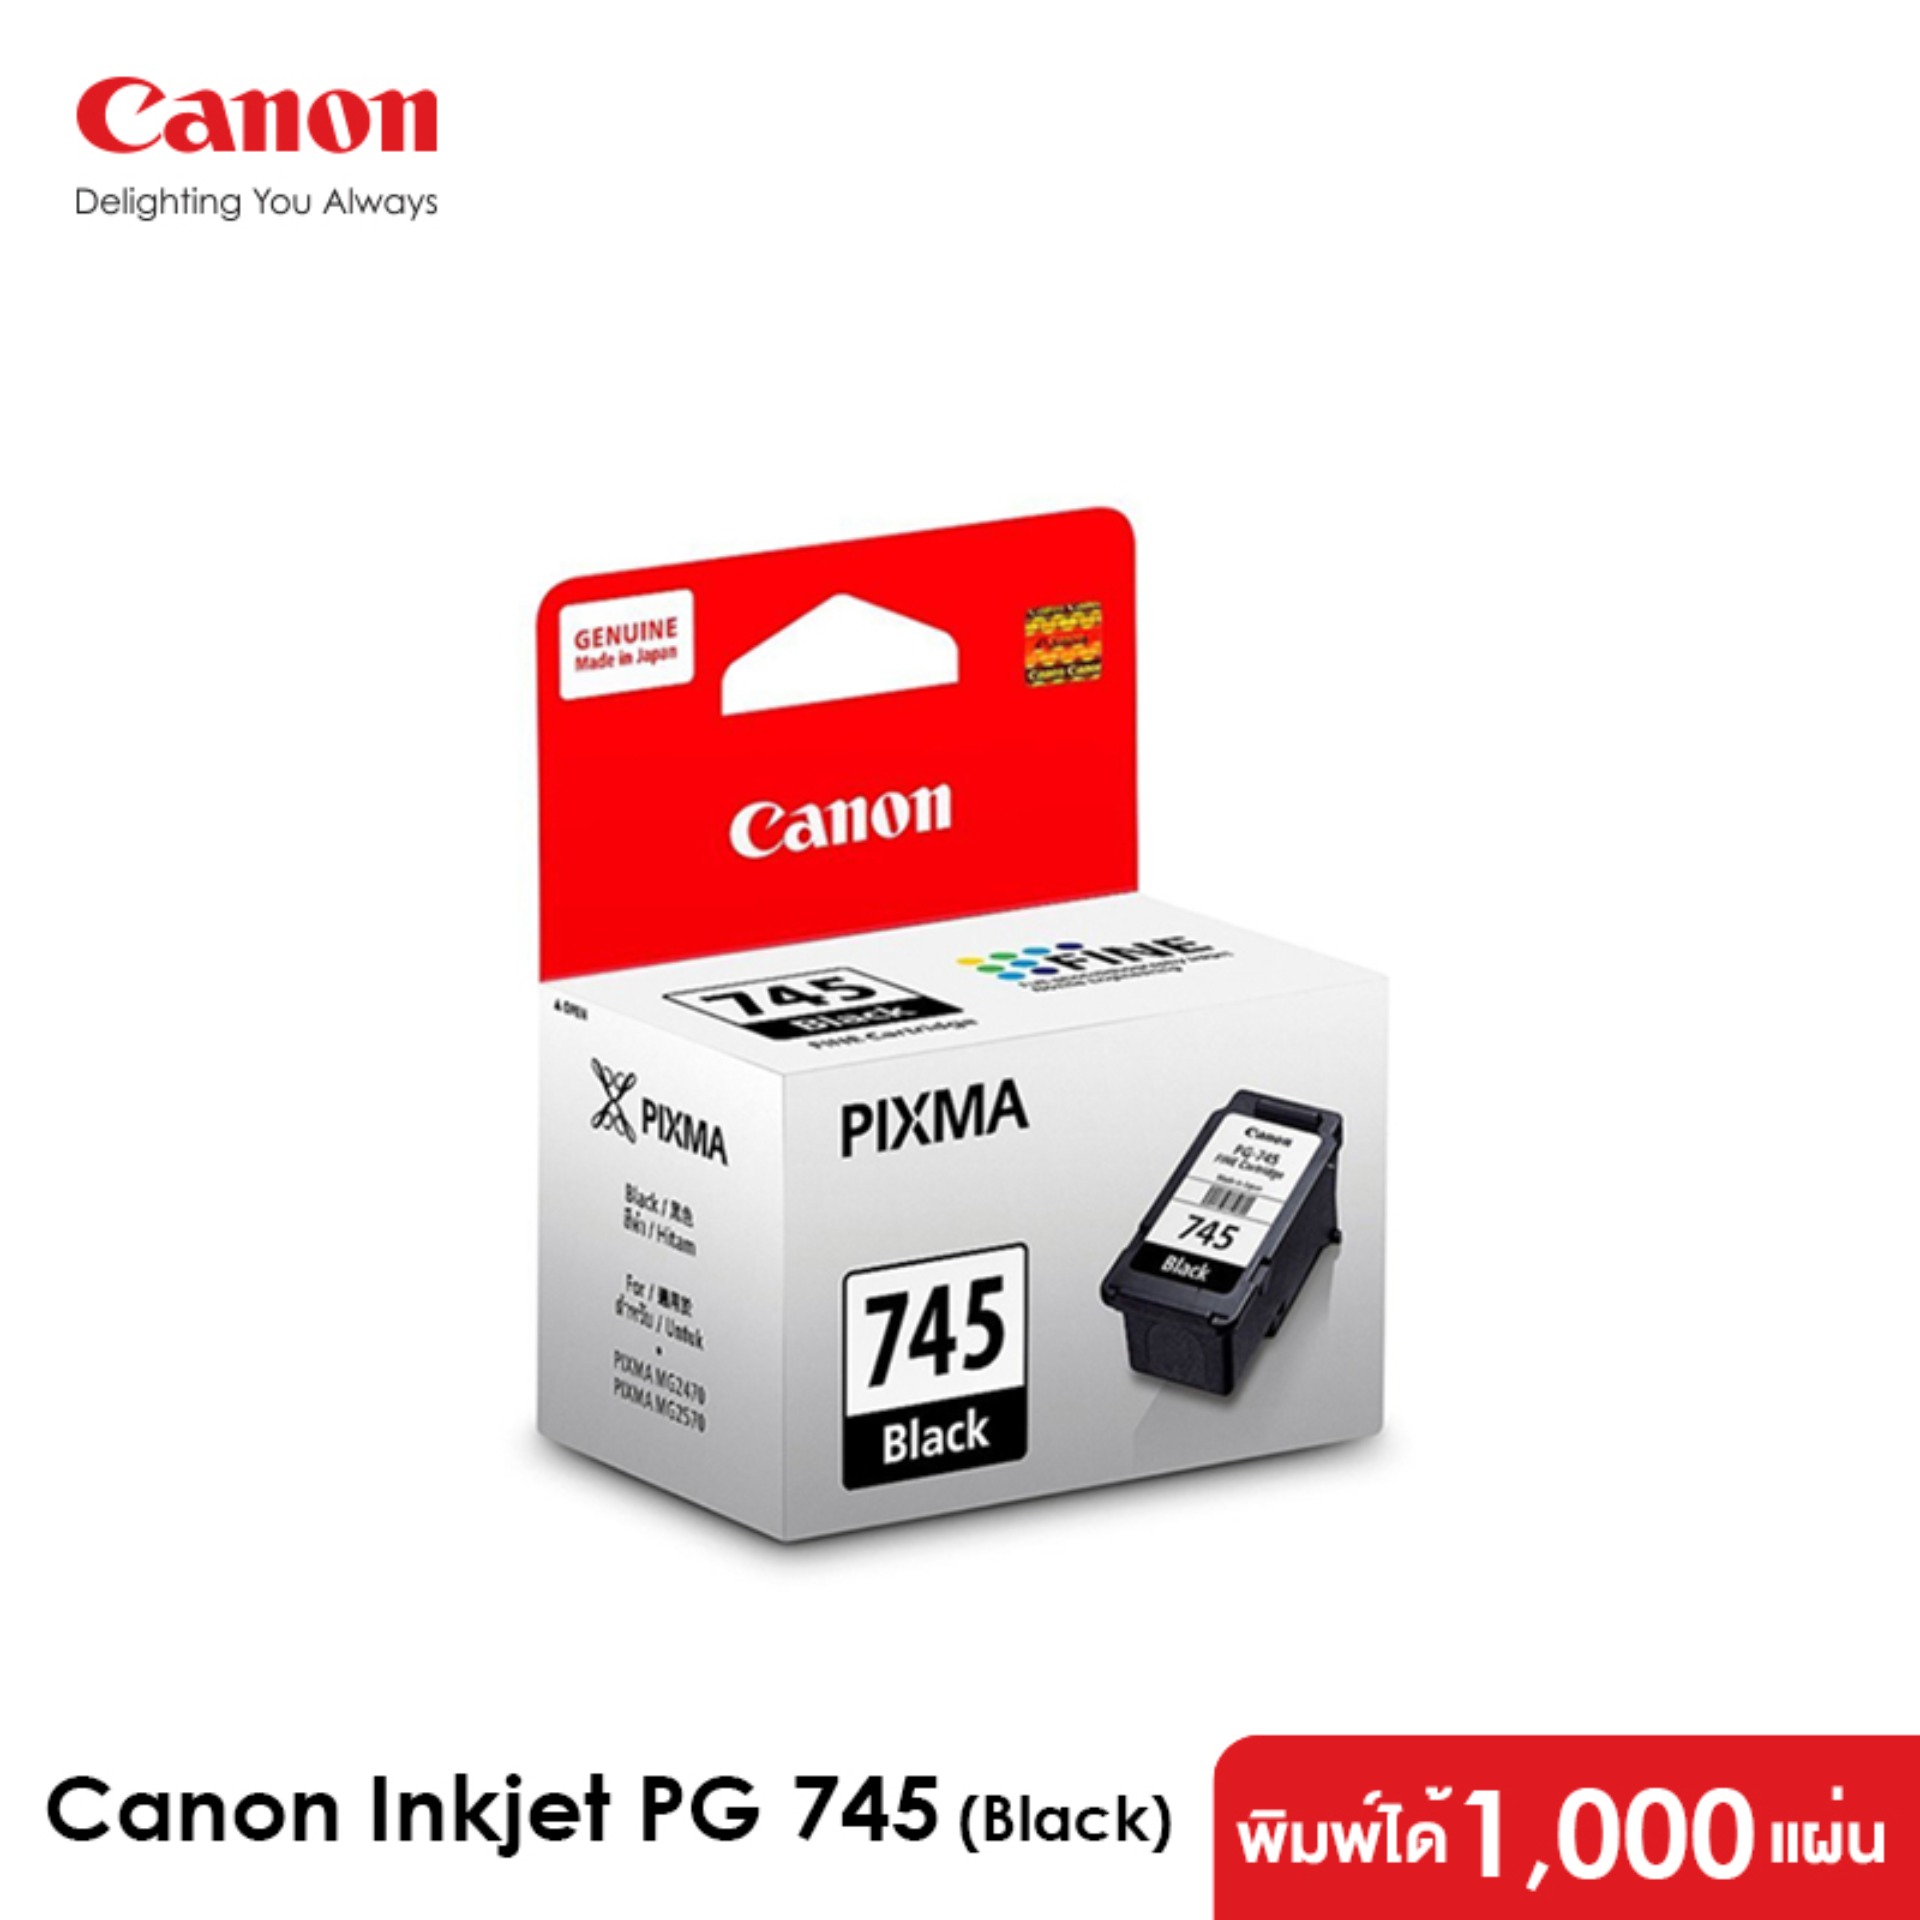 Canon ตลับหมึกอิงค์เจ็ท รุ่น PG 745 BK Black,CL 746 CL Color (หมึกแท้100%)